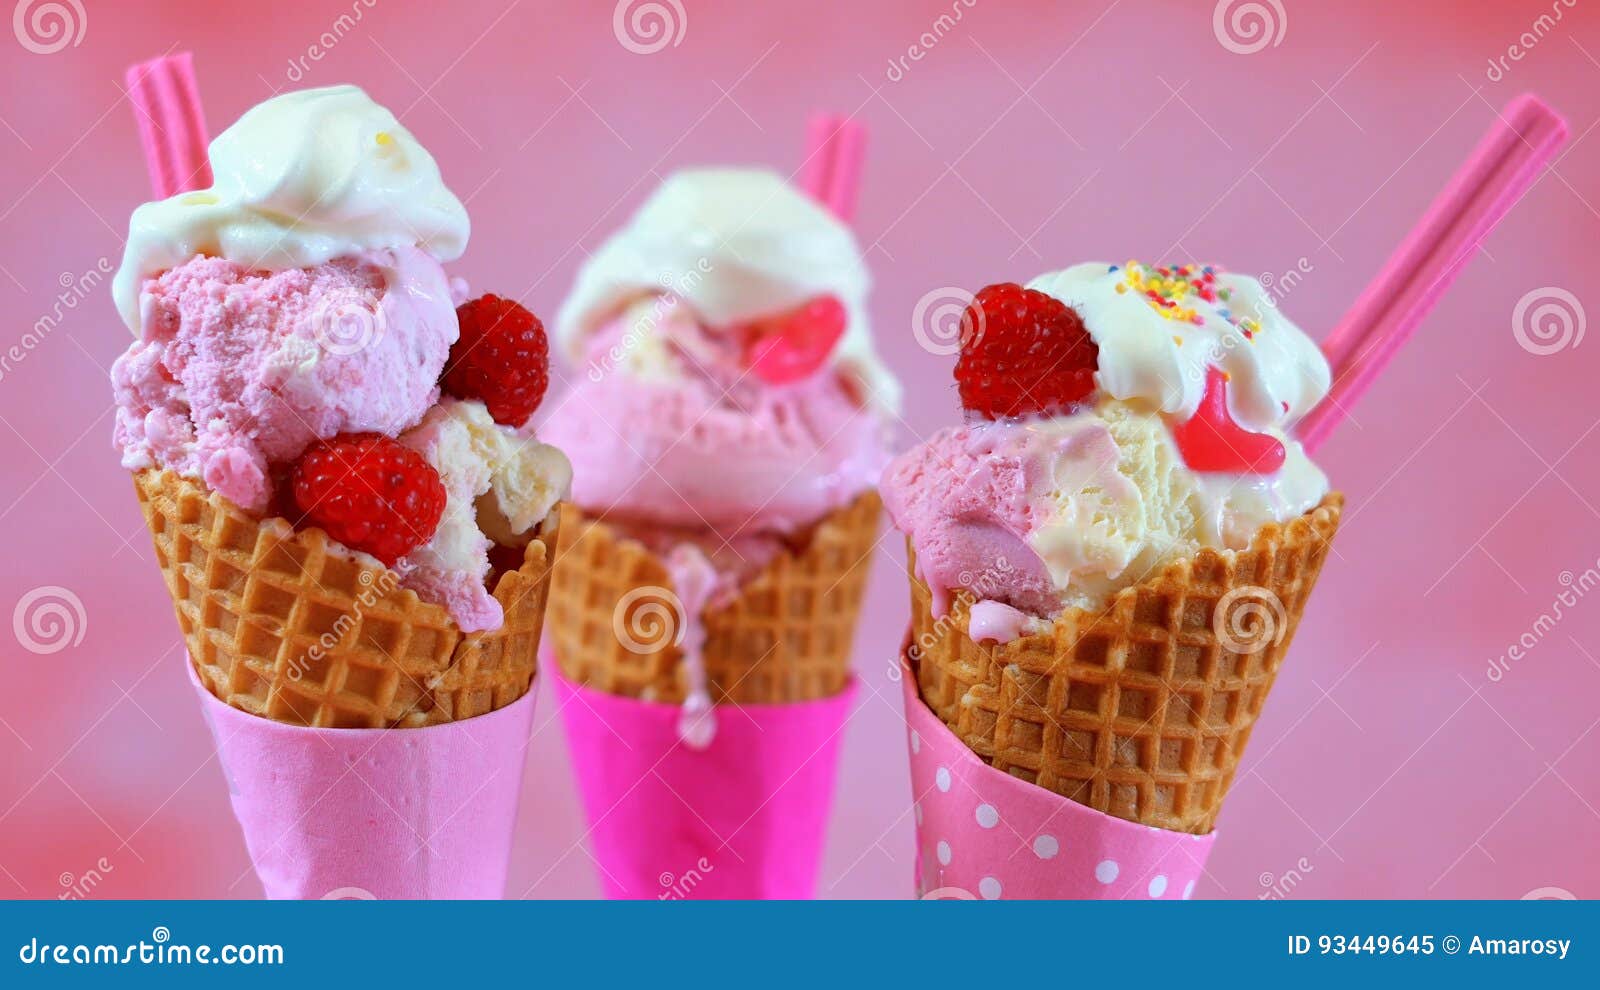 summertime pink ice cream cones